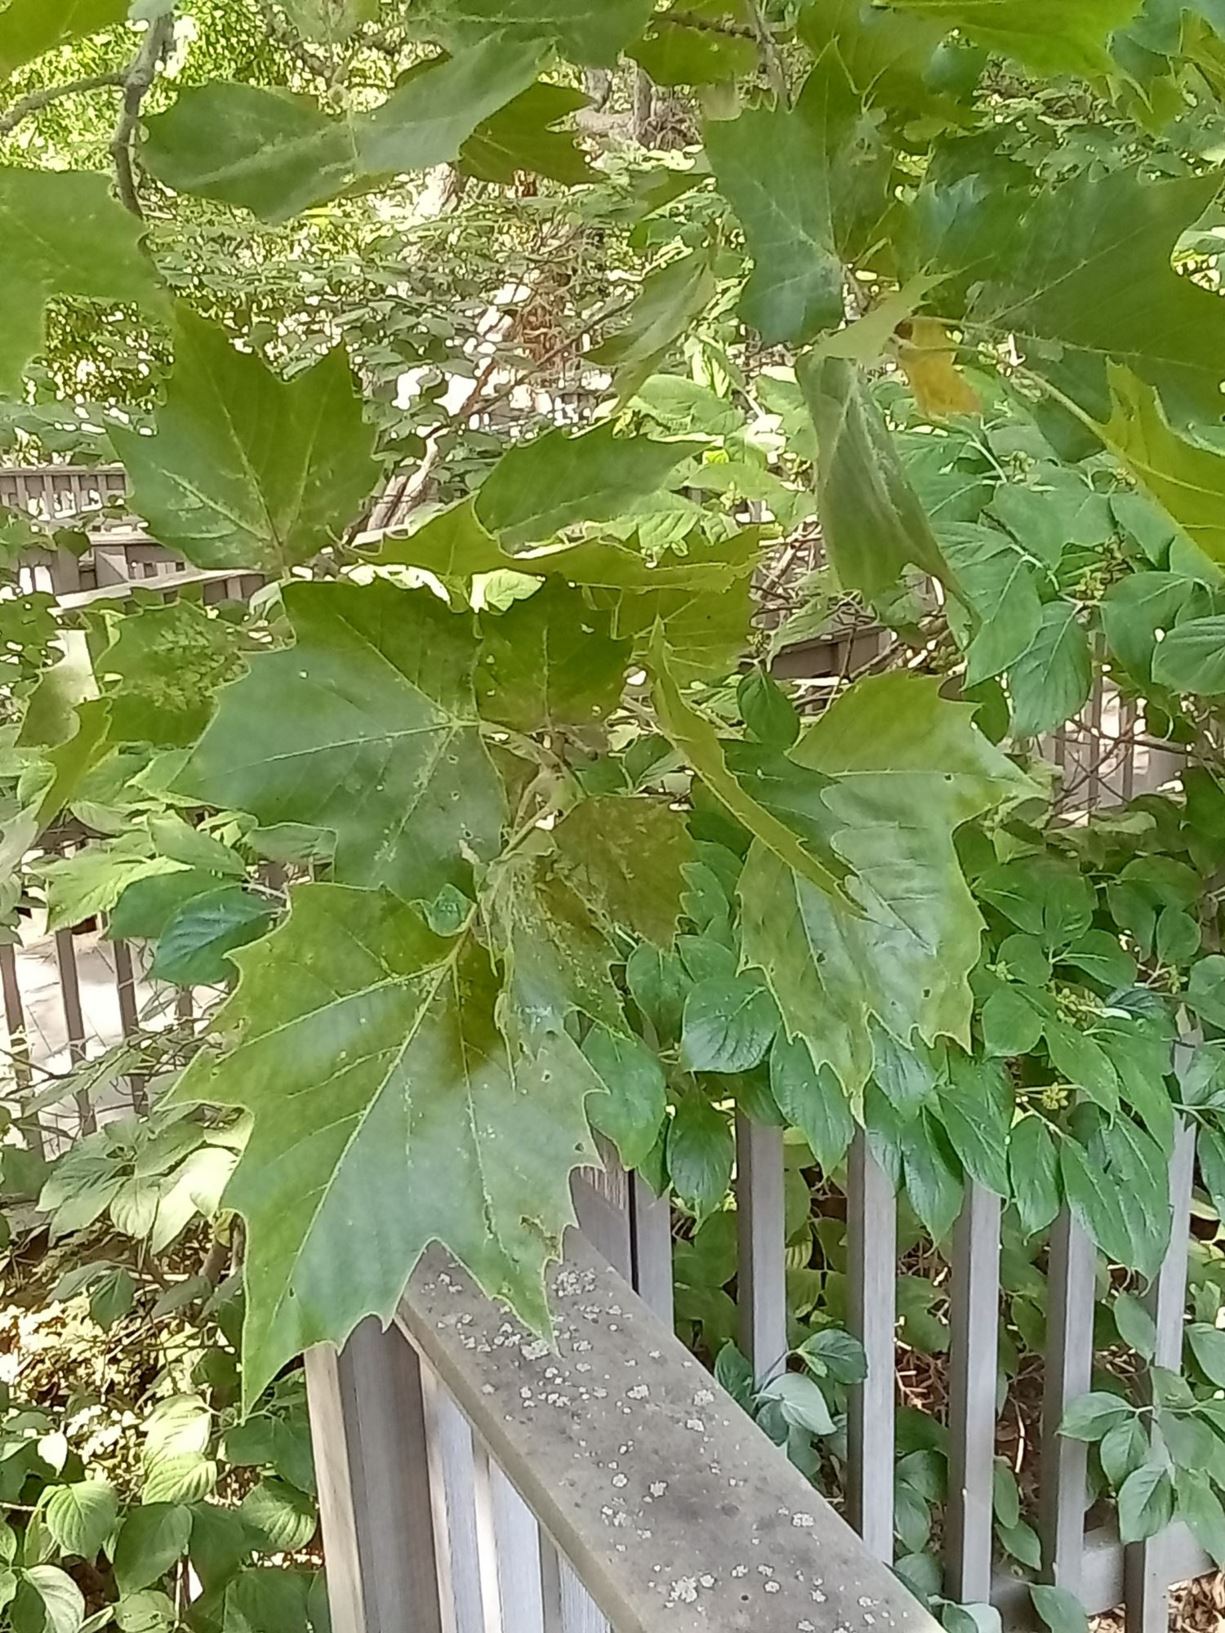 Platanus ×hispanica - London plane tree